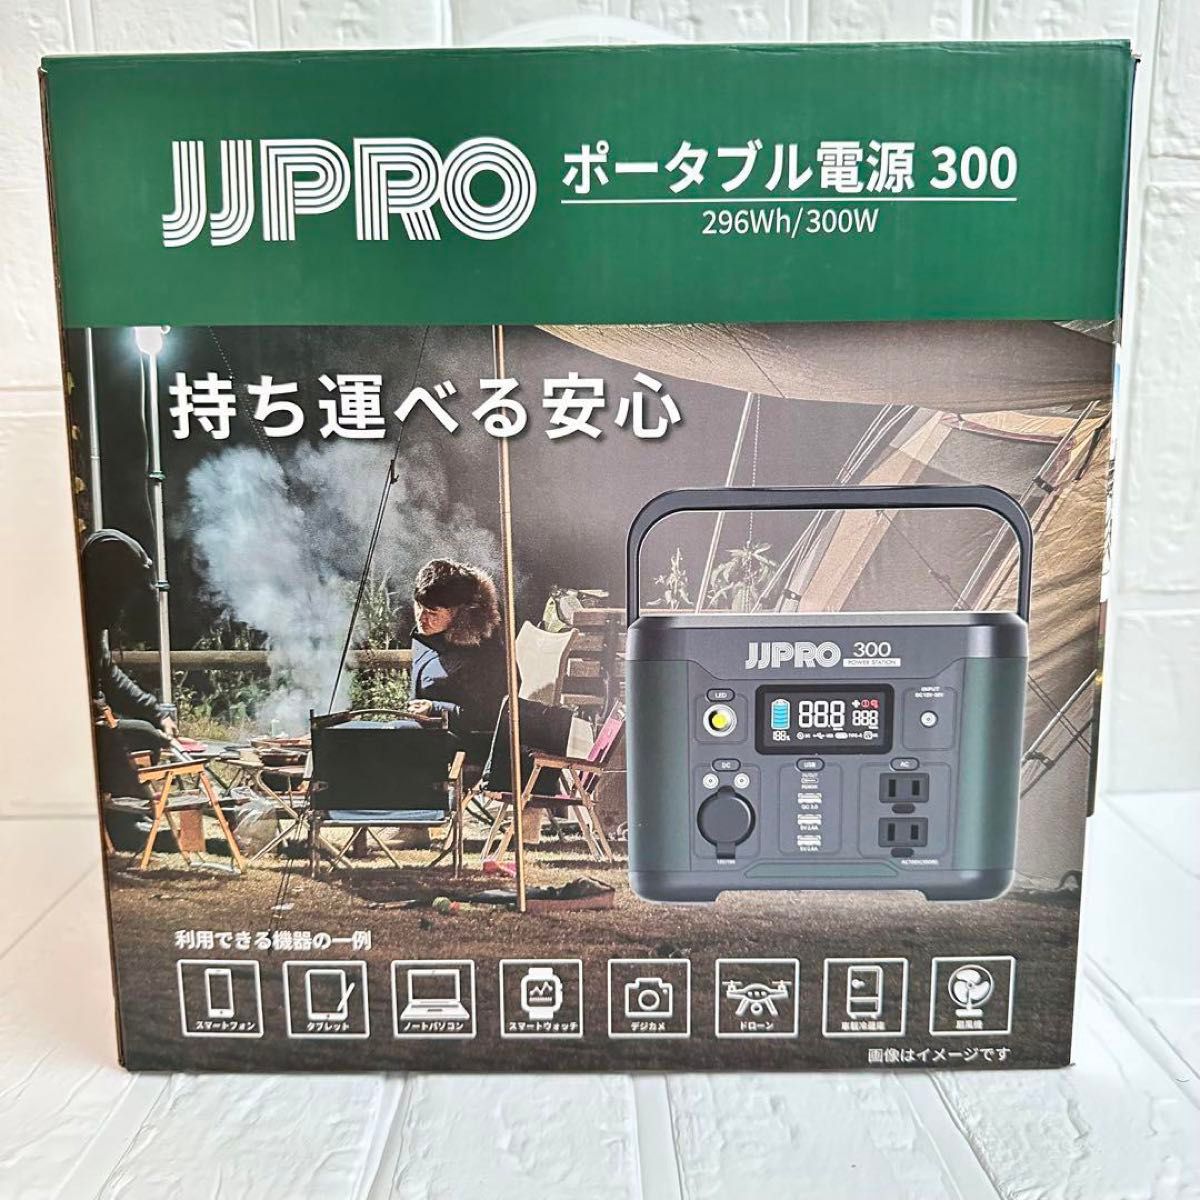 JJPRO ポータブル電源 バッテリー 300W 大容量 コンパクト アウトドア キャンプ 防災用 多機能  ポータブルバッテリー